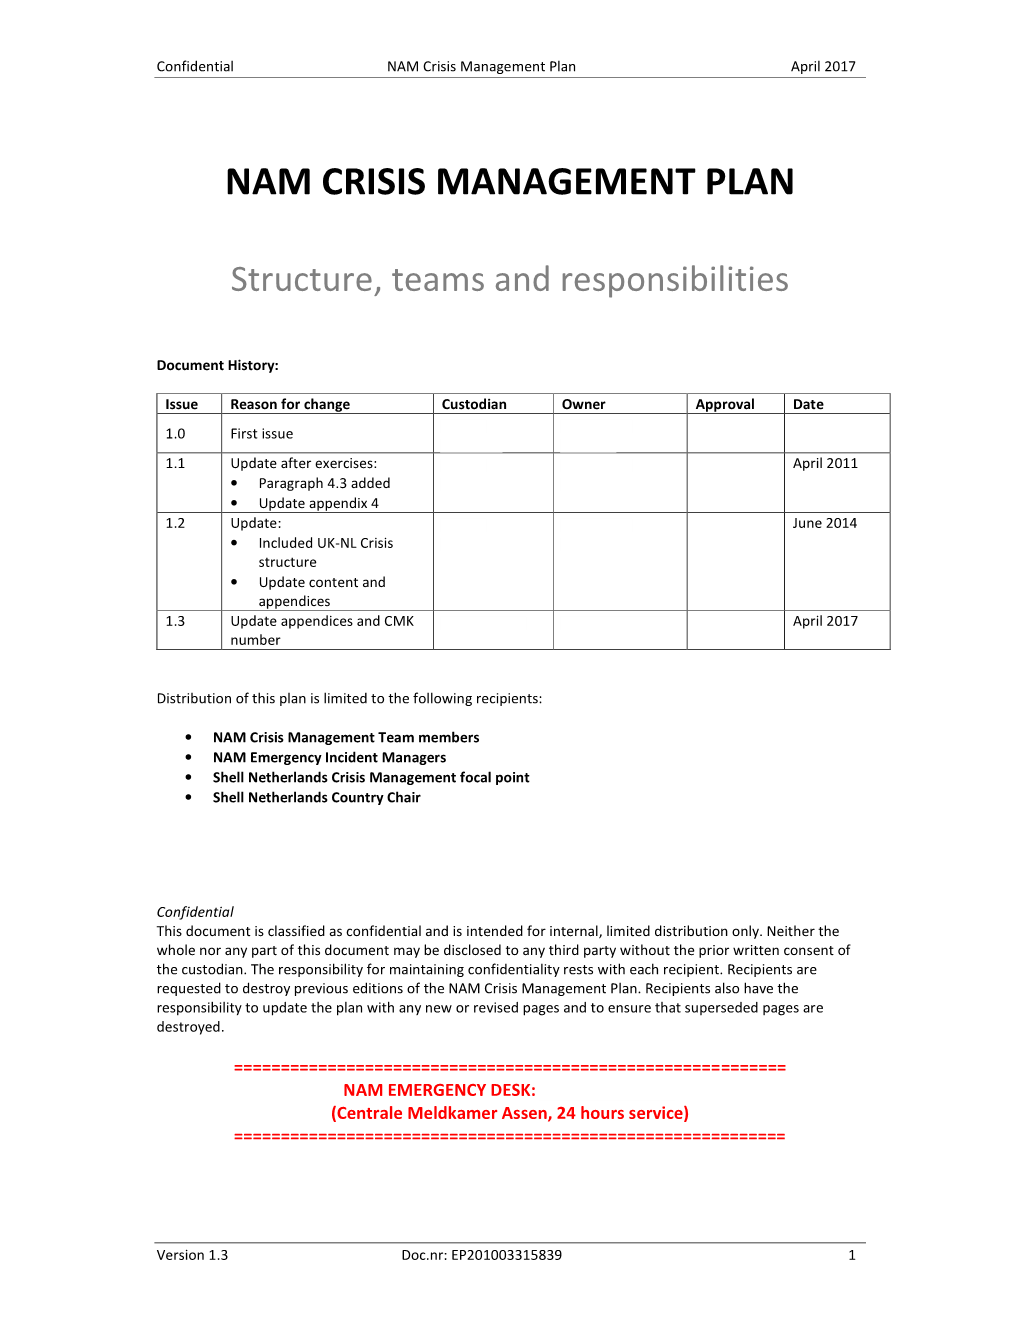 NAM Crisis Management Plan April 2017